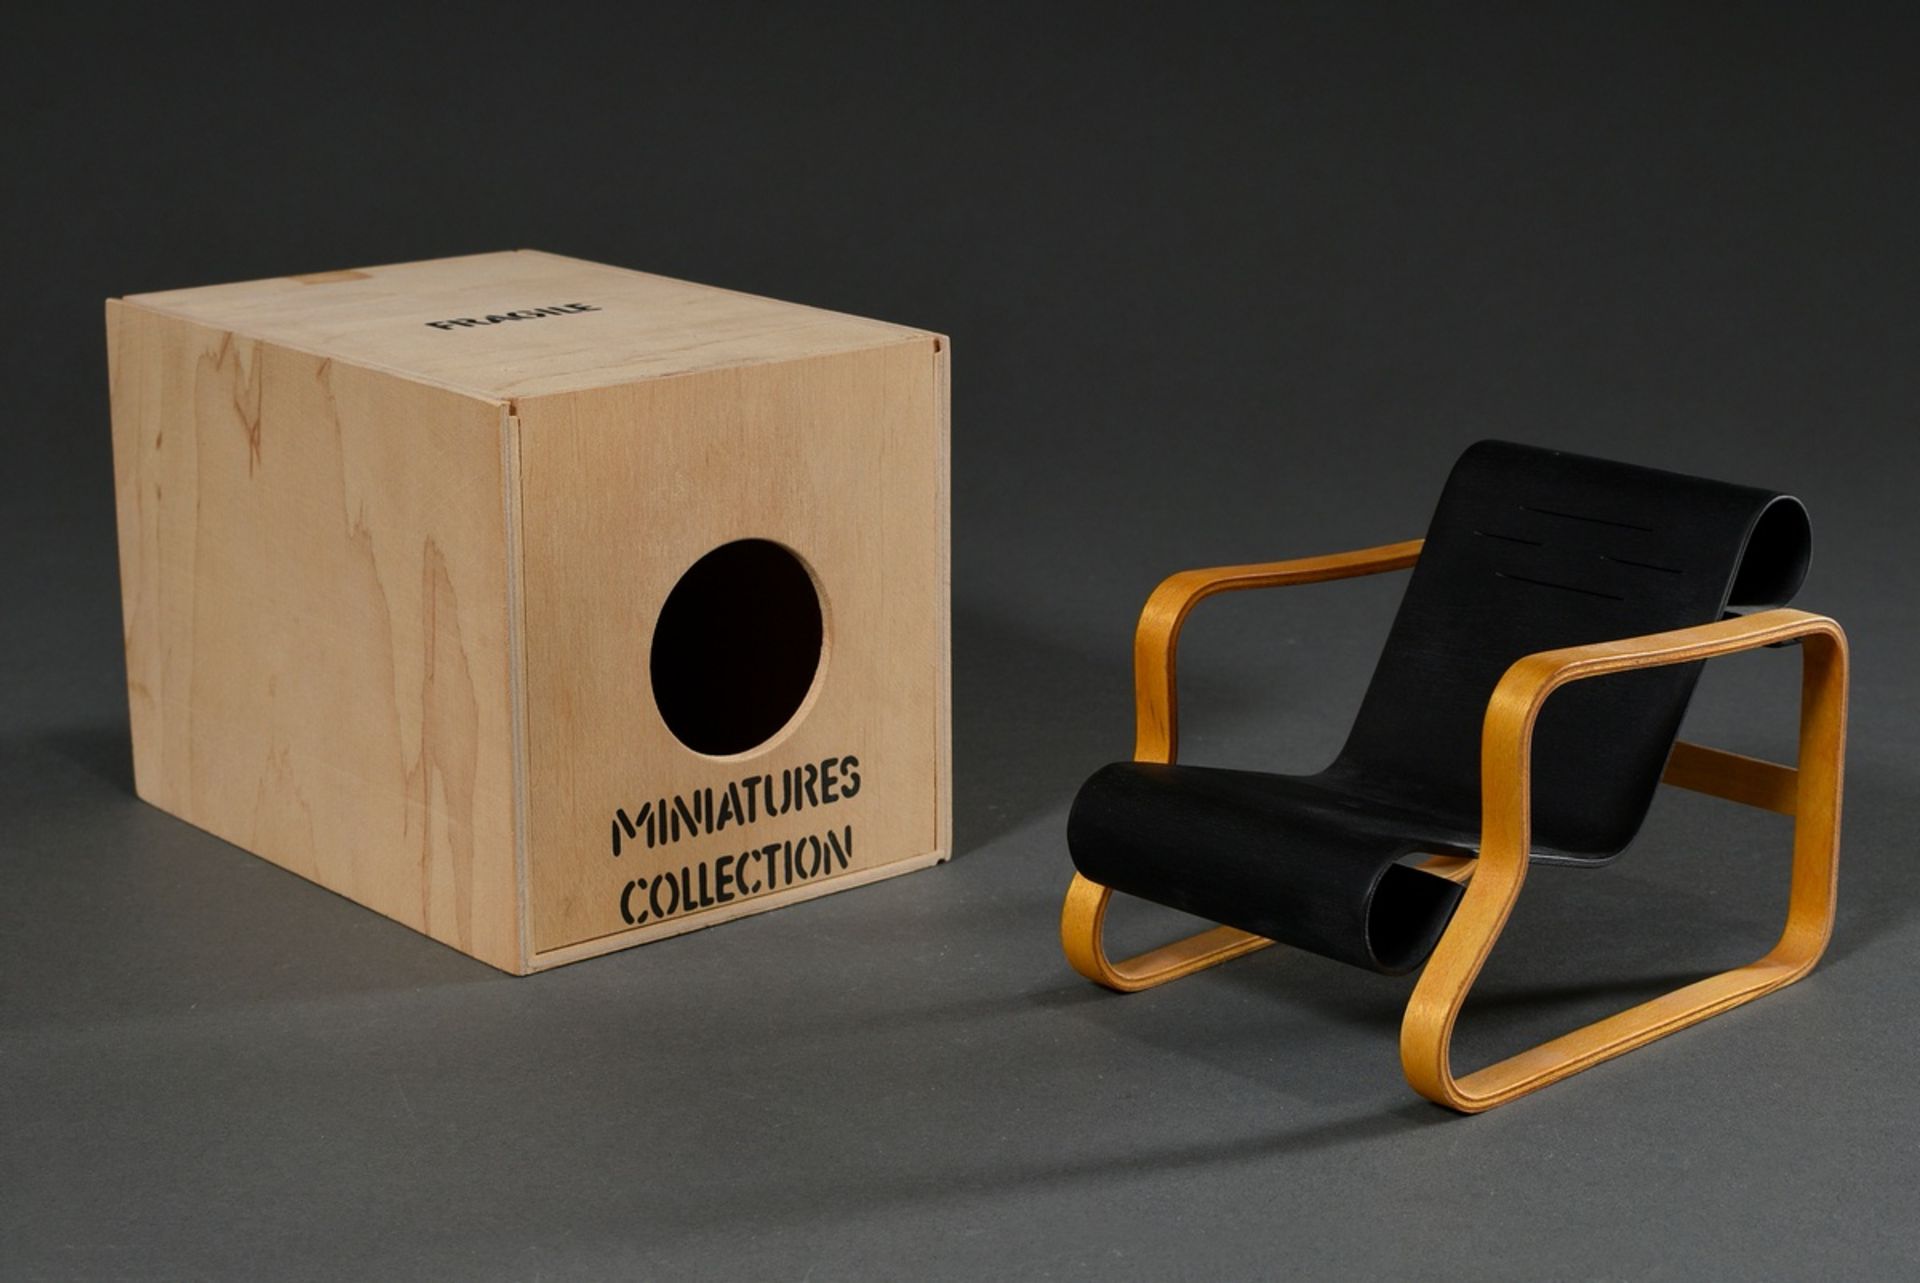 Miniature model armchair "No. 41 Paimio", design: Alvar Aalto 1930, plywood, lacquered, Vitra Desig